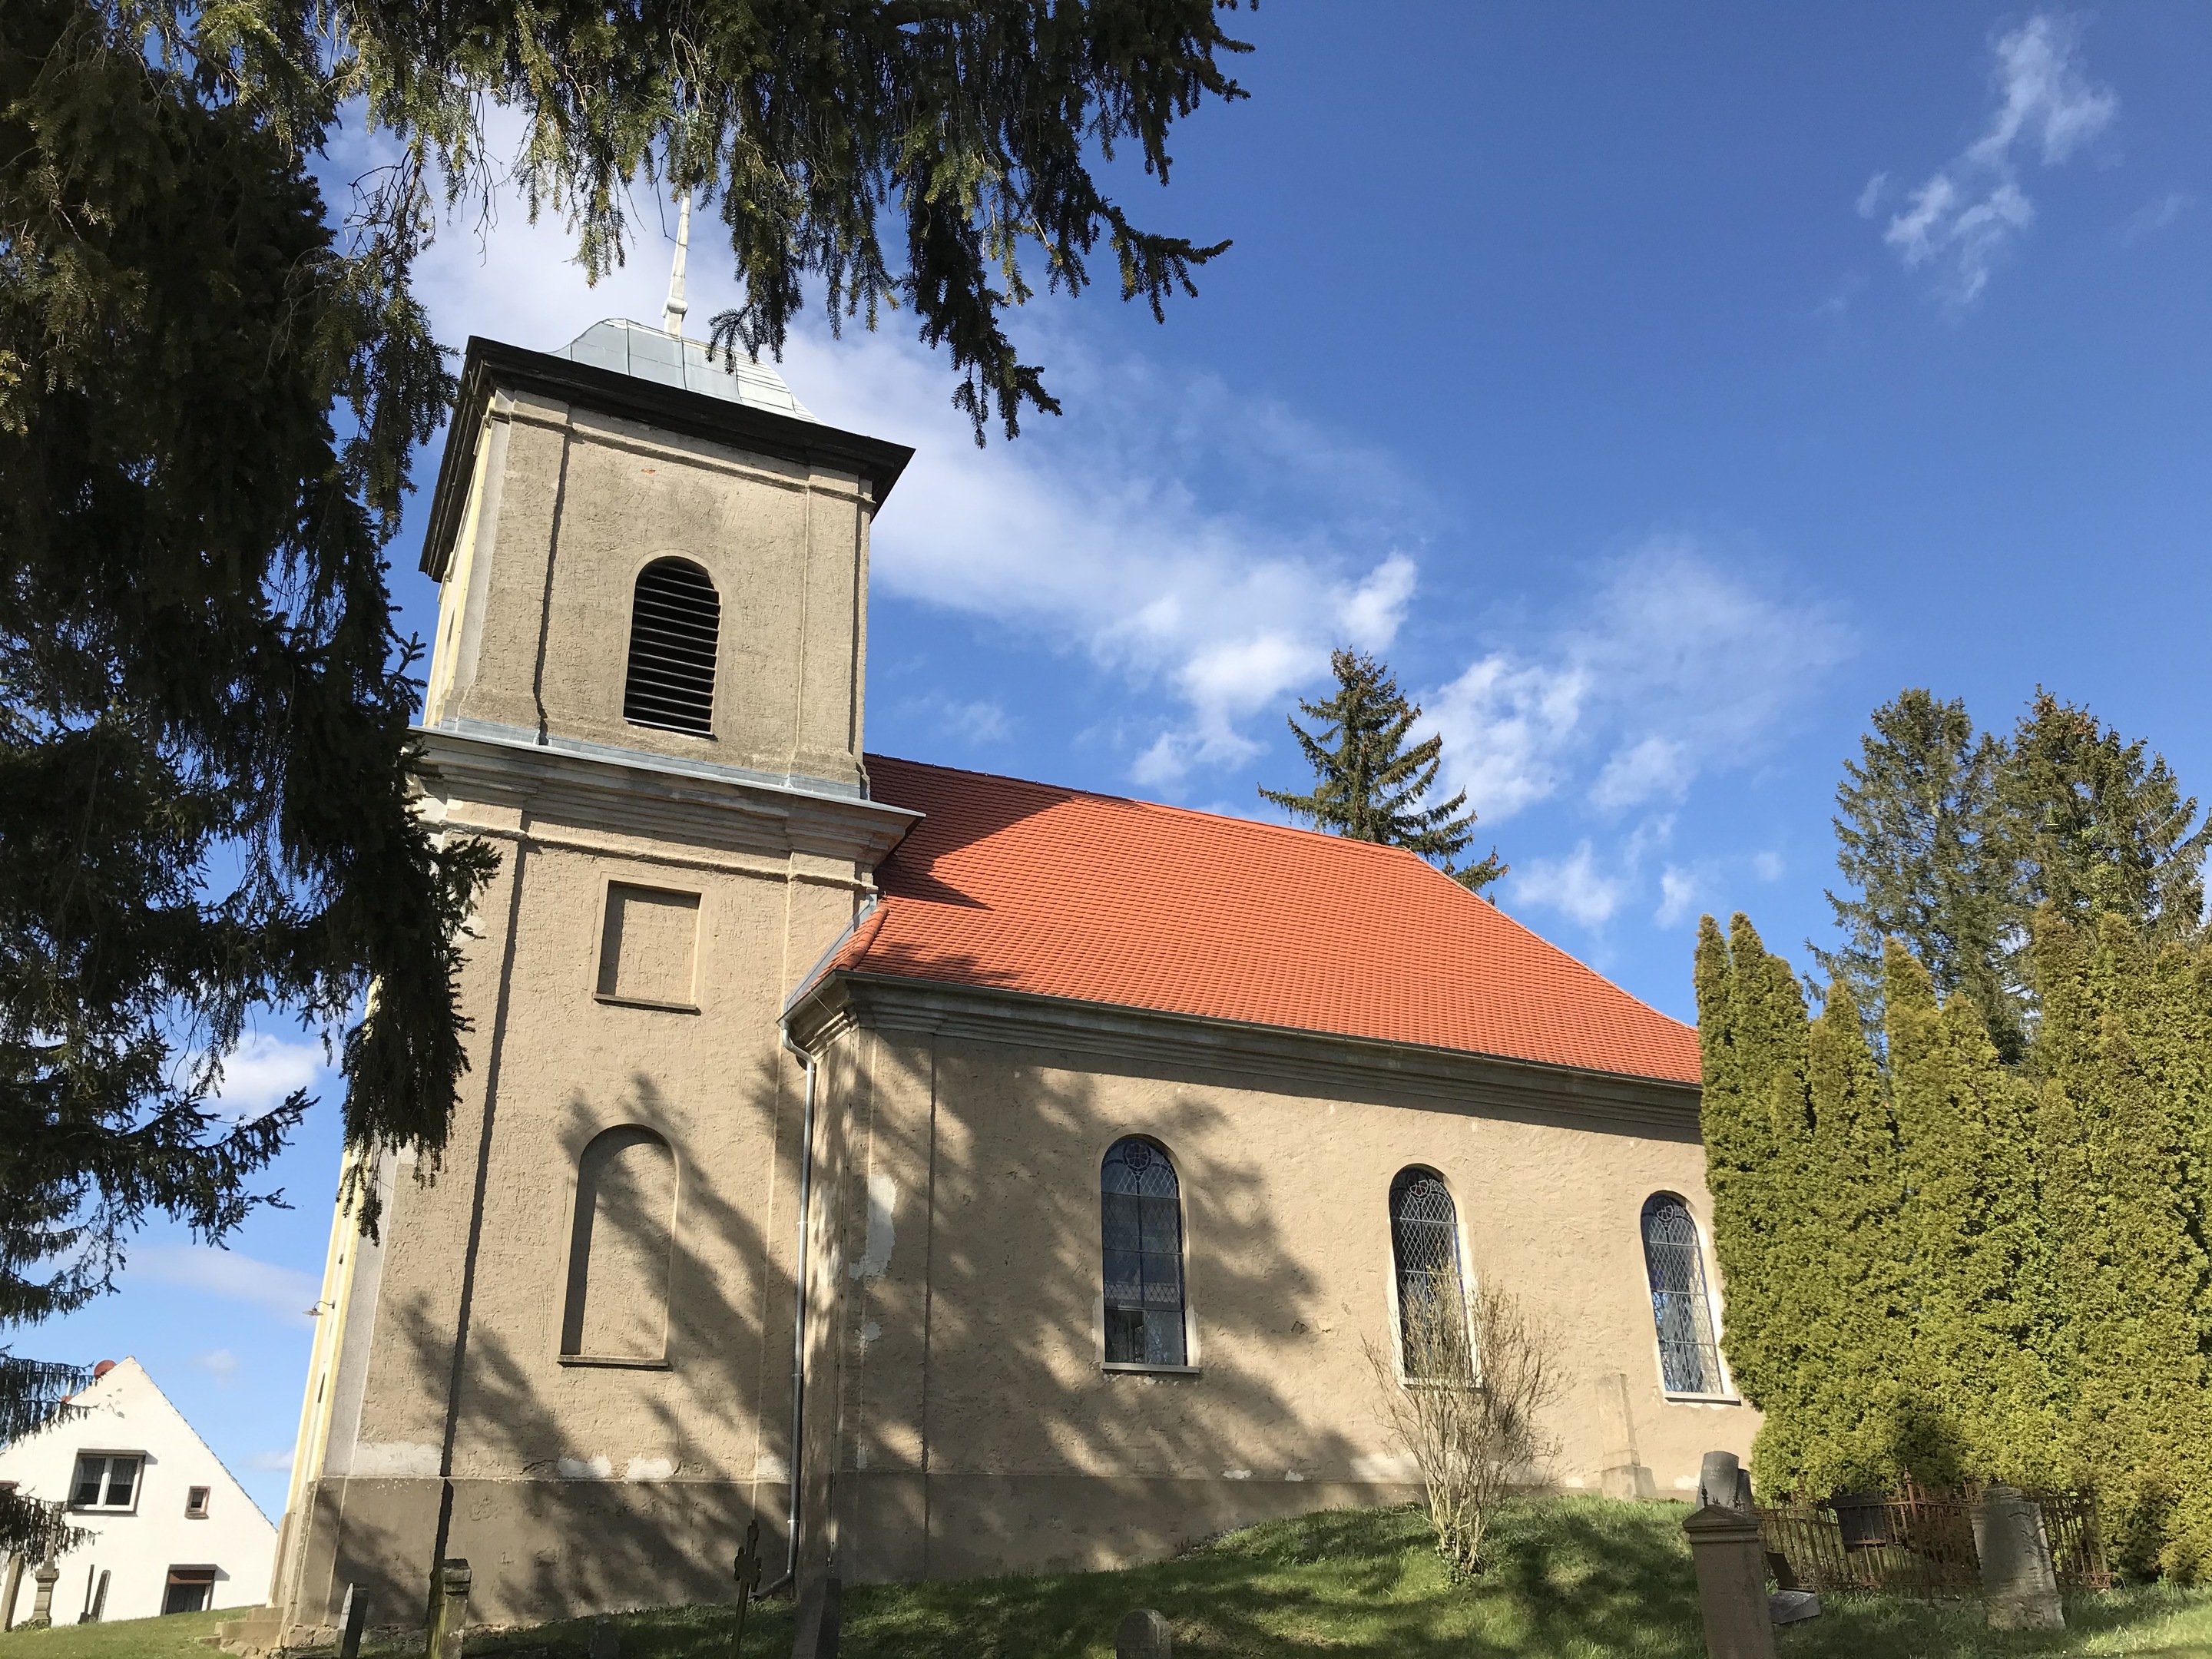 Dorfkirche Rosenow, Foto: Anet Hoppe, Lizenz: Anet Hoppe